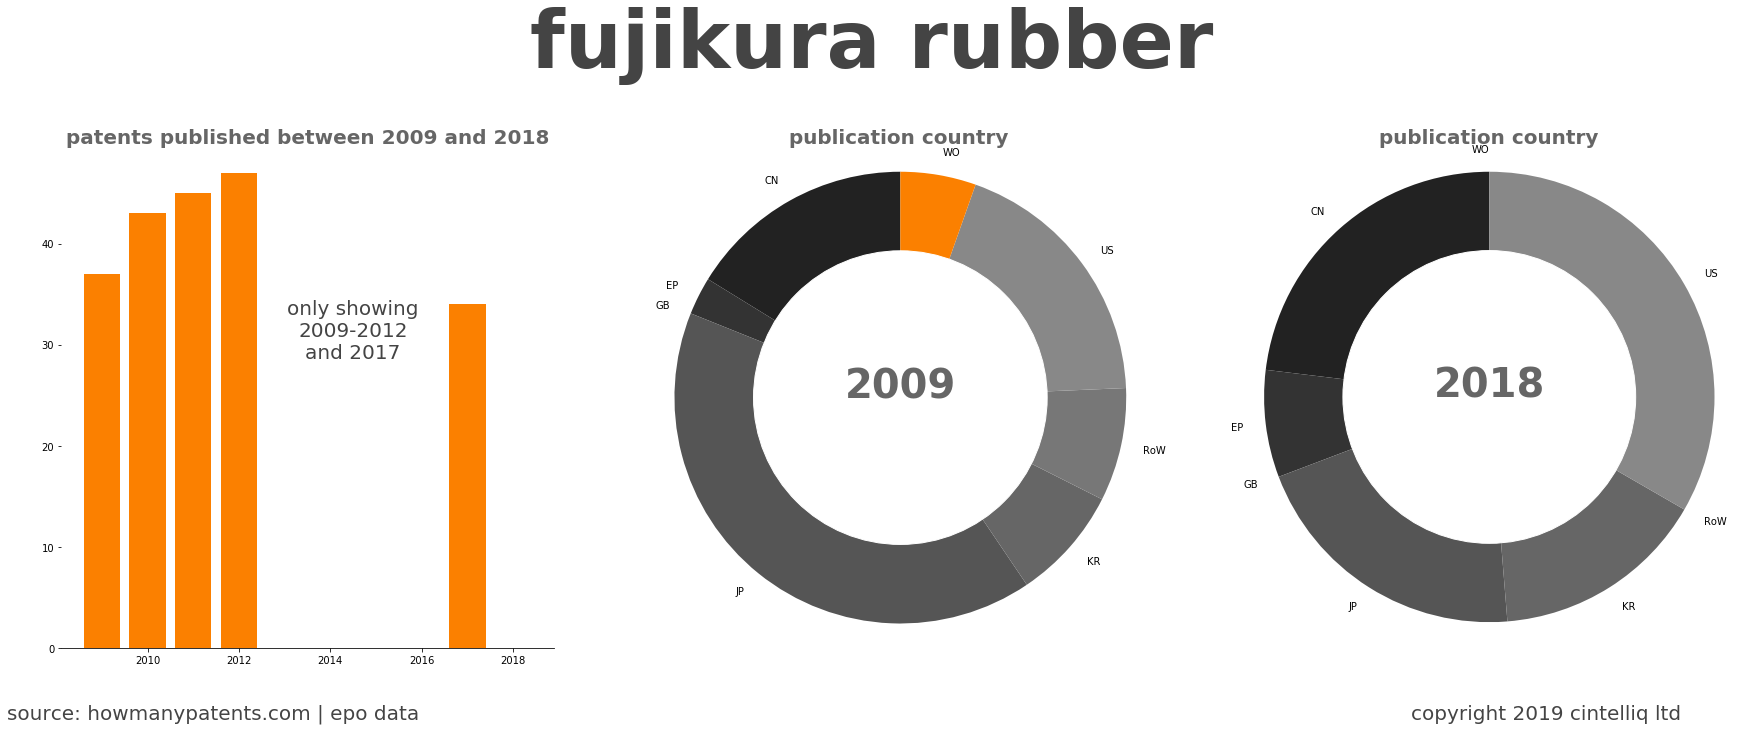 summary of patents for Fujikura Rubber